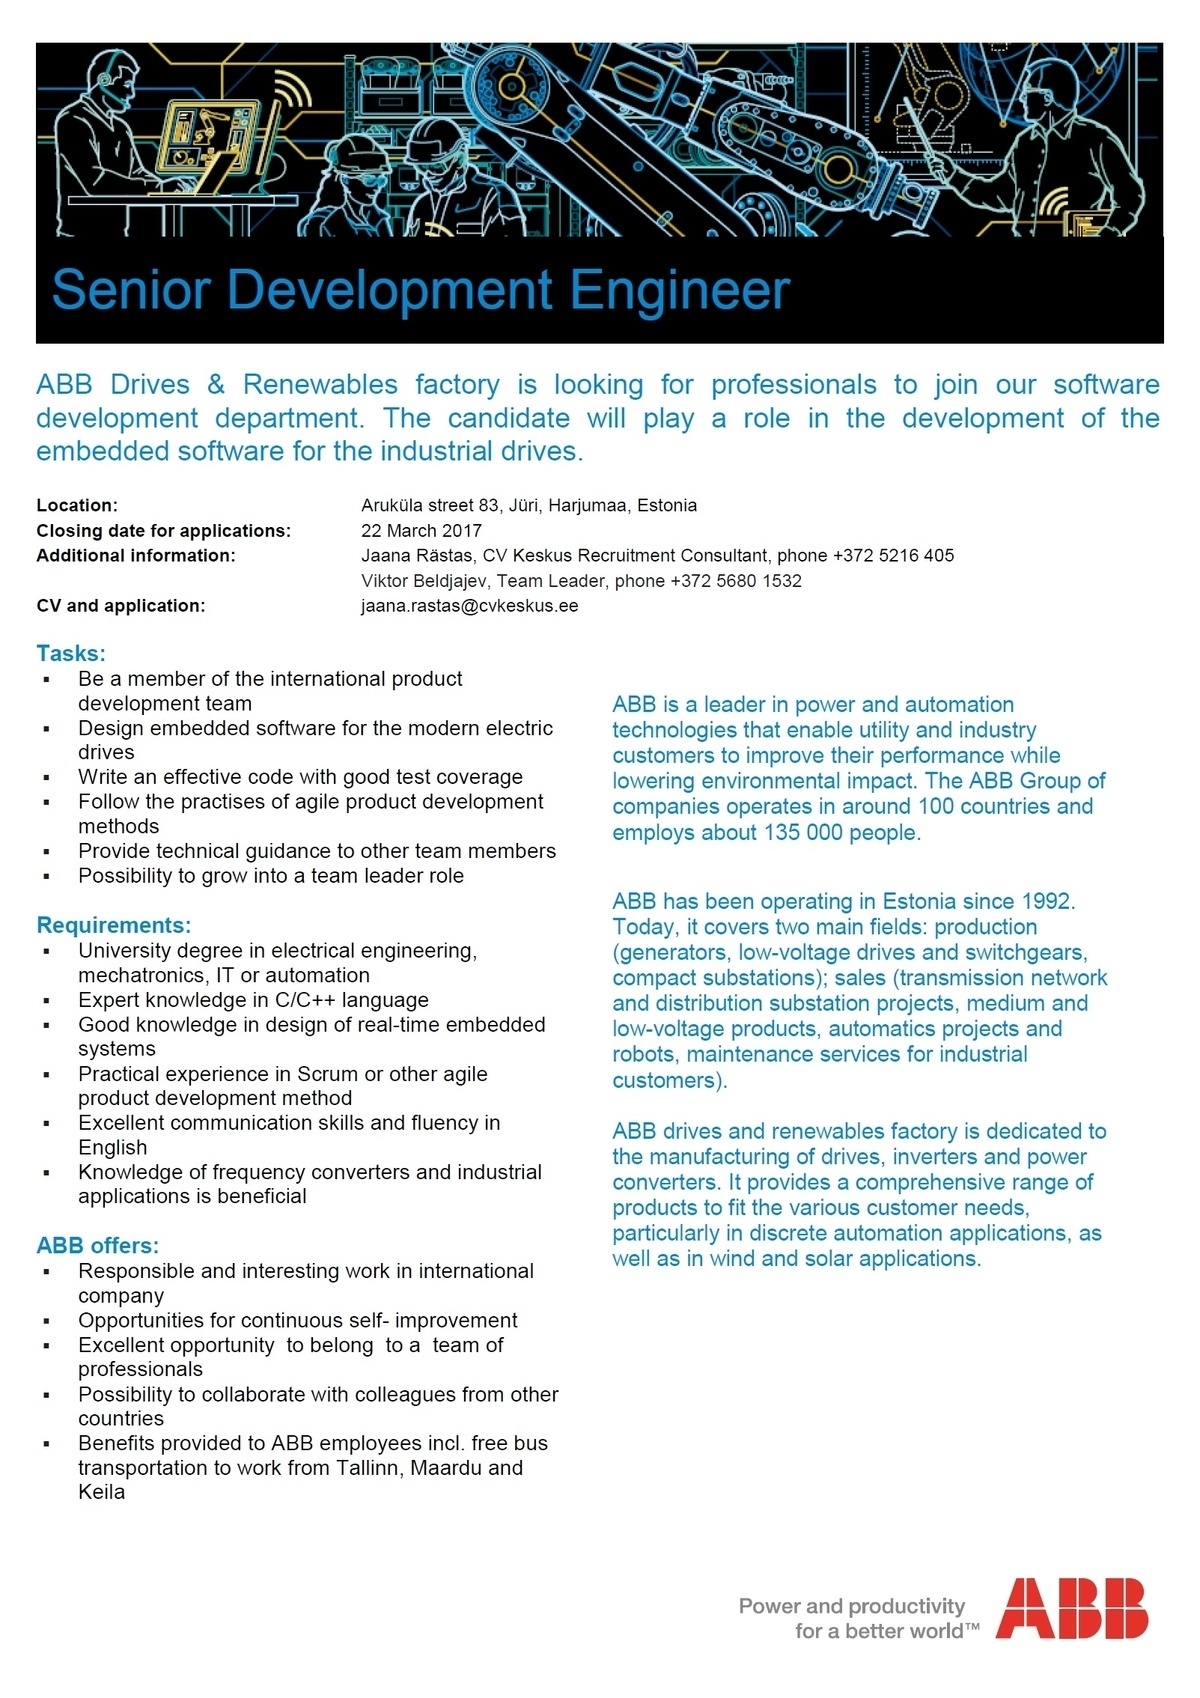 CV KESKUS OÜ ABB is looking for a Senior Development Engineer